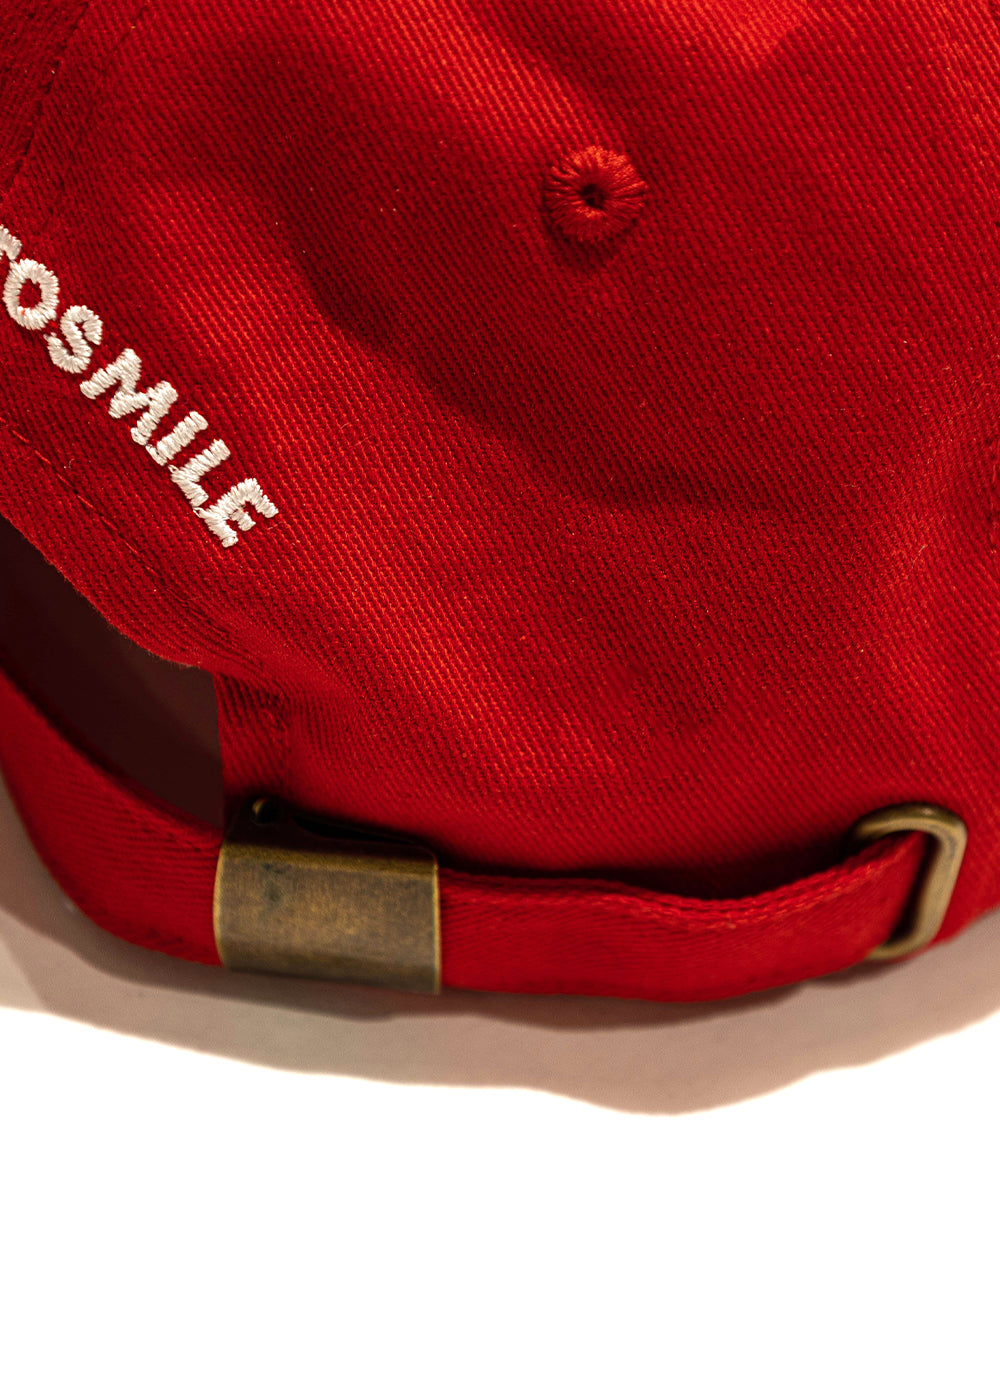 Red Smiling Cap